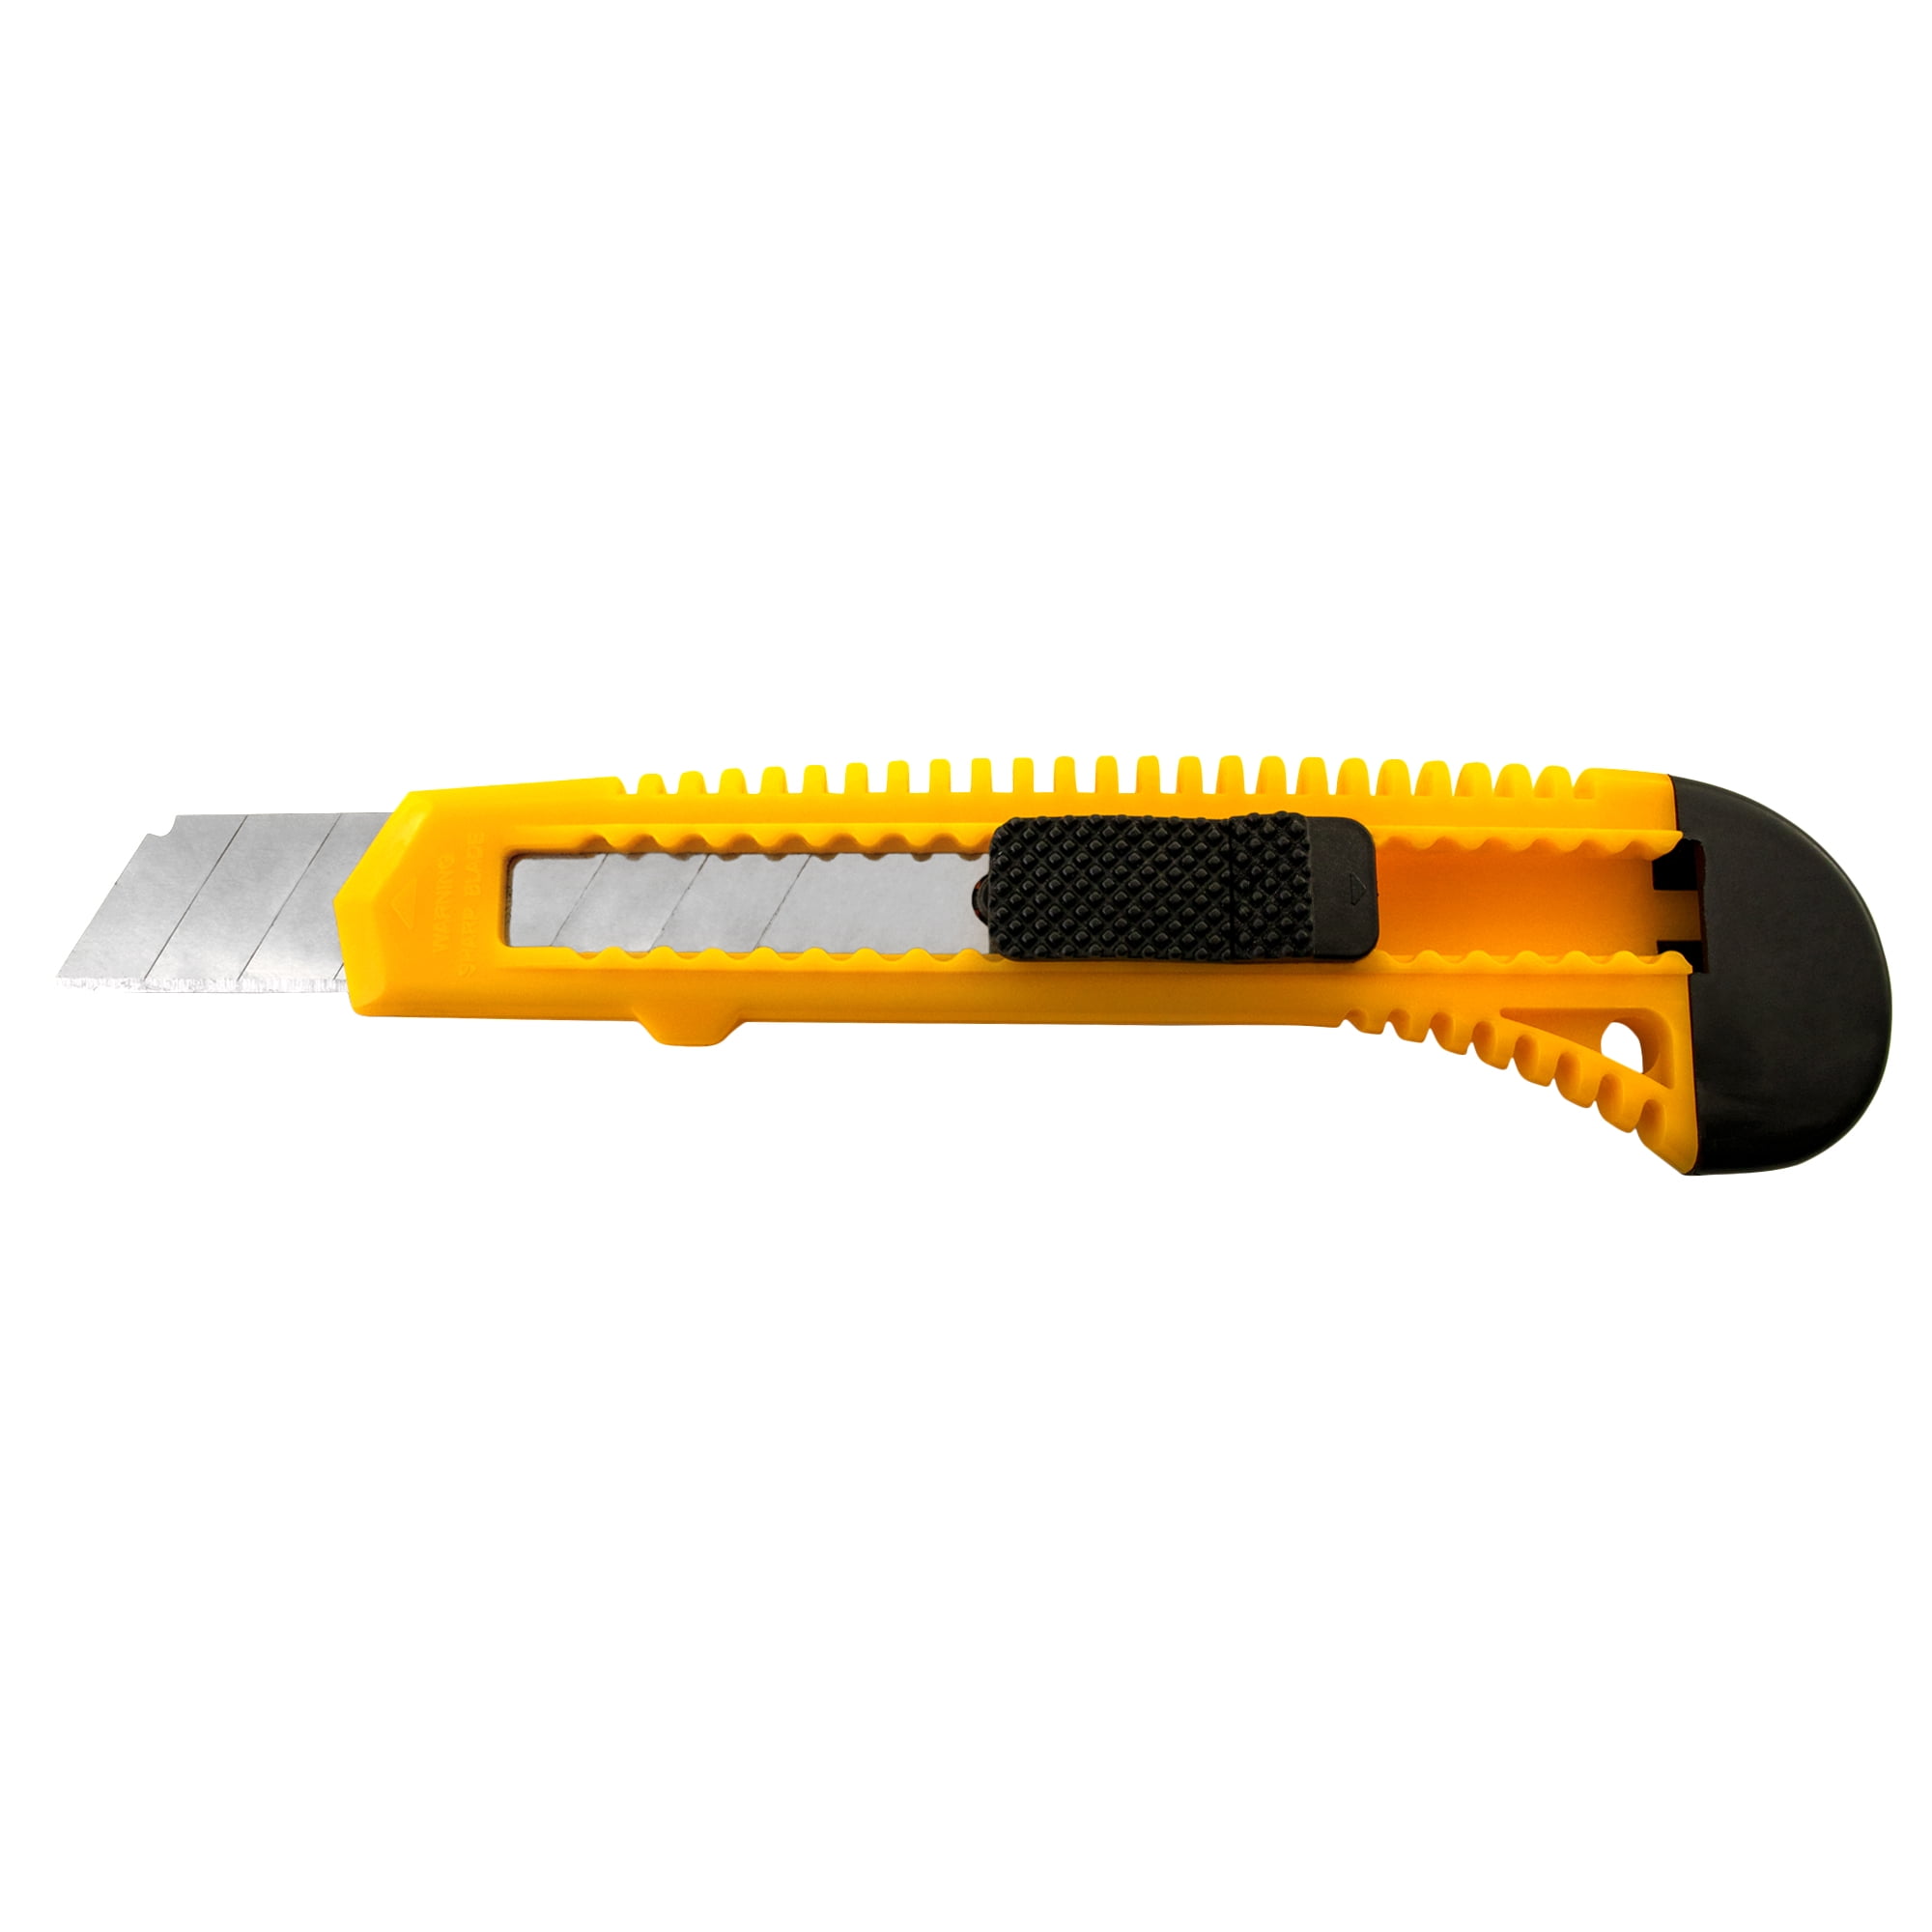 Snap Blade Utility Cutter Knife  Box Cutter Blades Replacement - 10 Pcs  Snap - Aliexpress